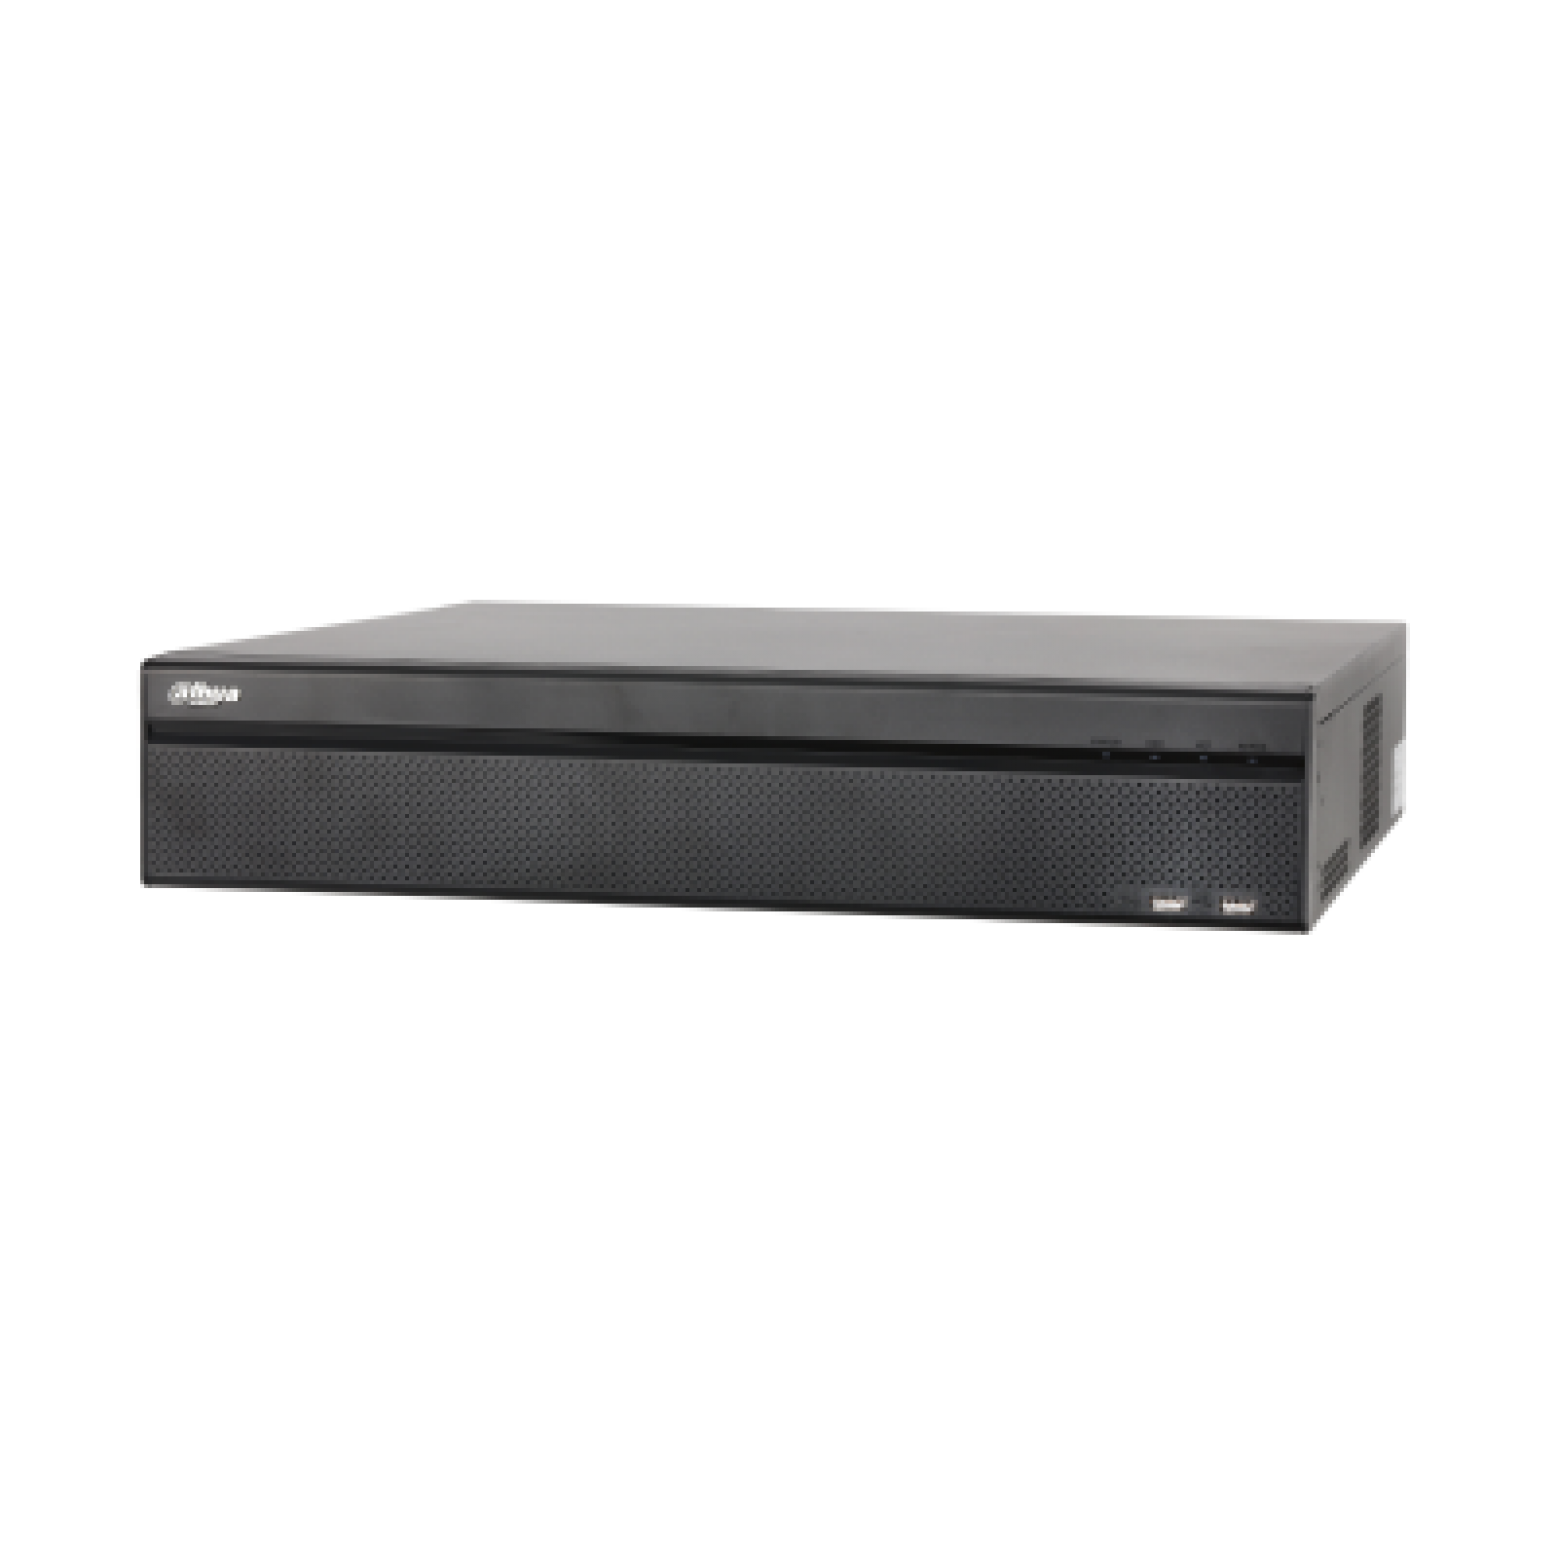 Dahua DH-NVR5832-R-4KS2 Pro Series 32 Kanaals Network Video Recorder - RAID